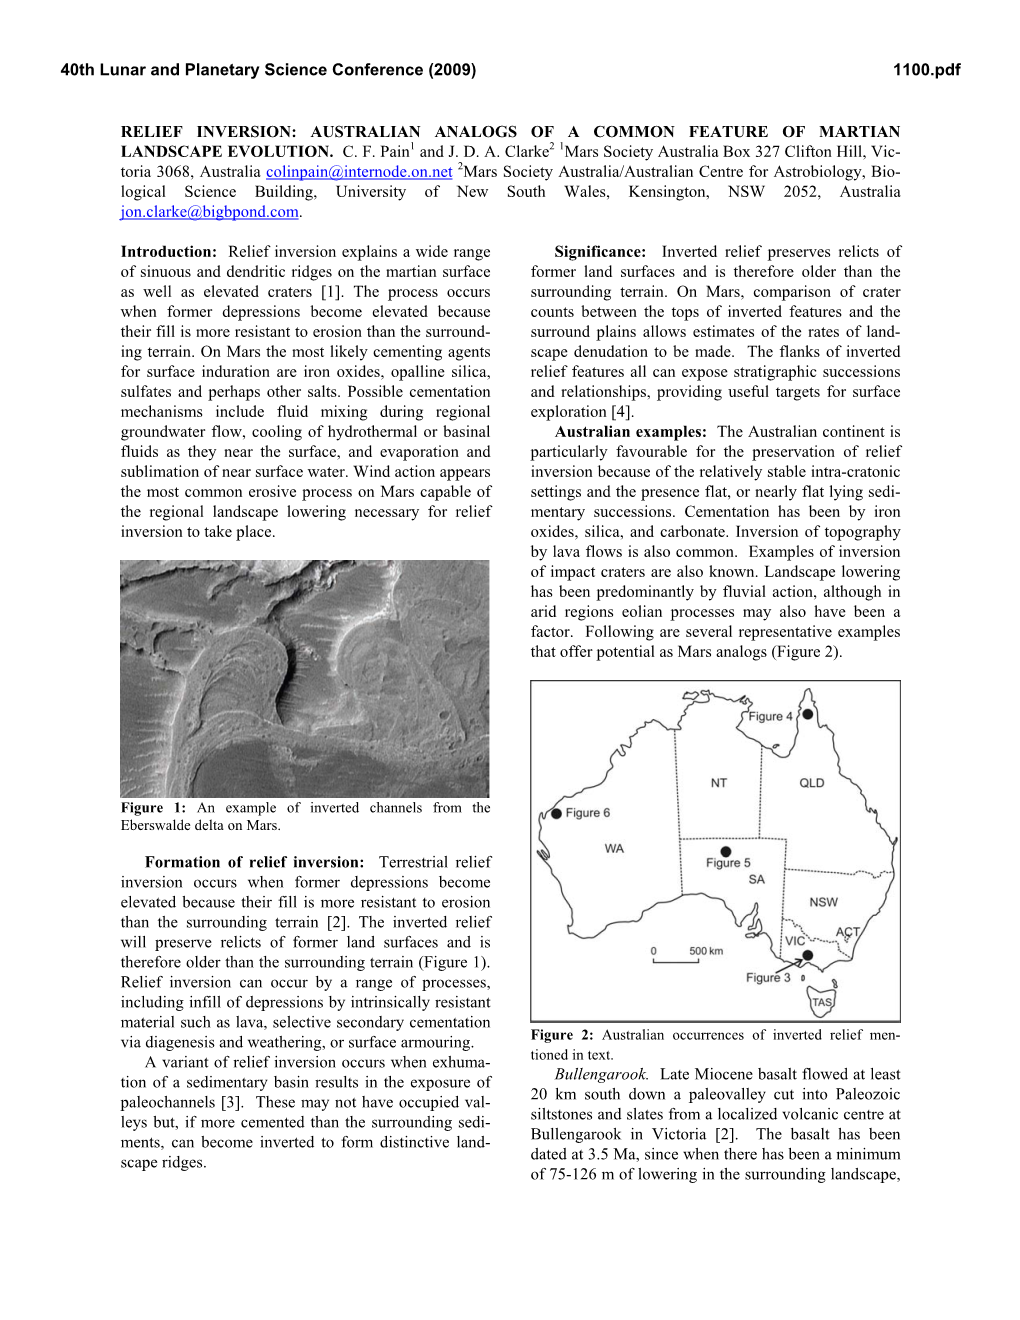 Relief Inversion: Australian Analogs of a Common Feature of Martian Landscape Evolution